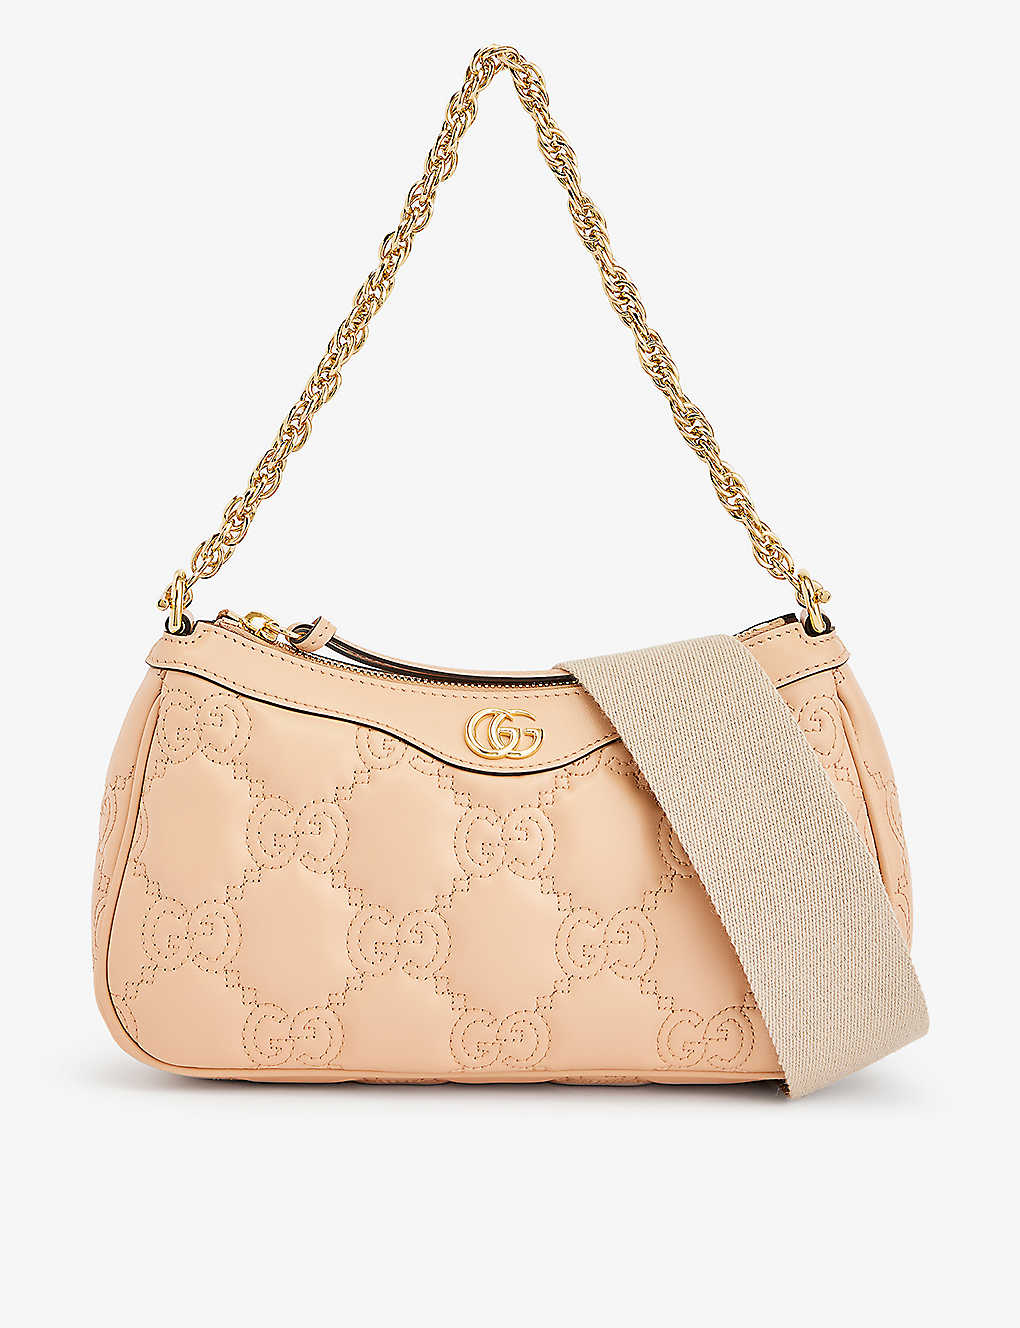 Gucci Womens Pink Sand/natural Matelassé Leather Shoulder Bag